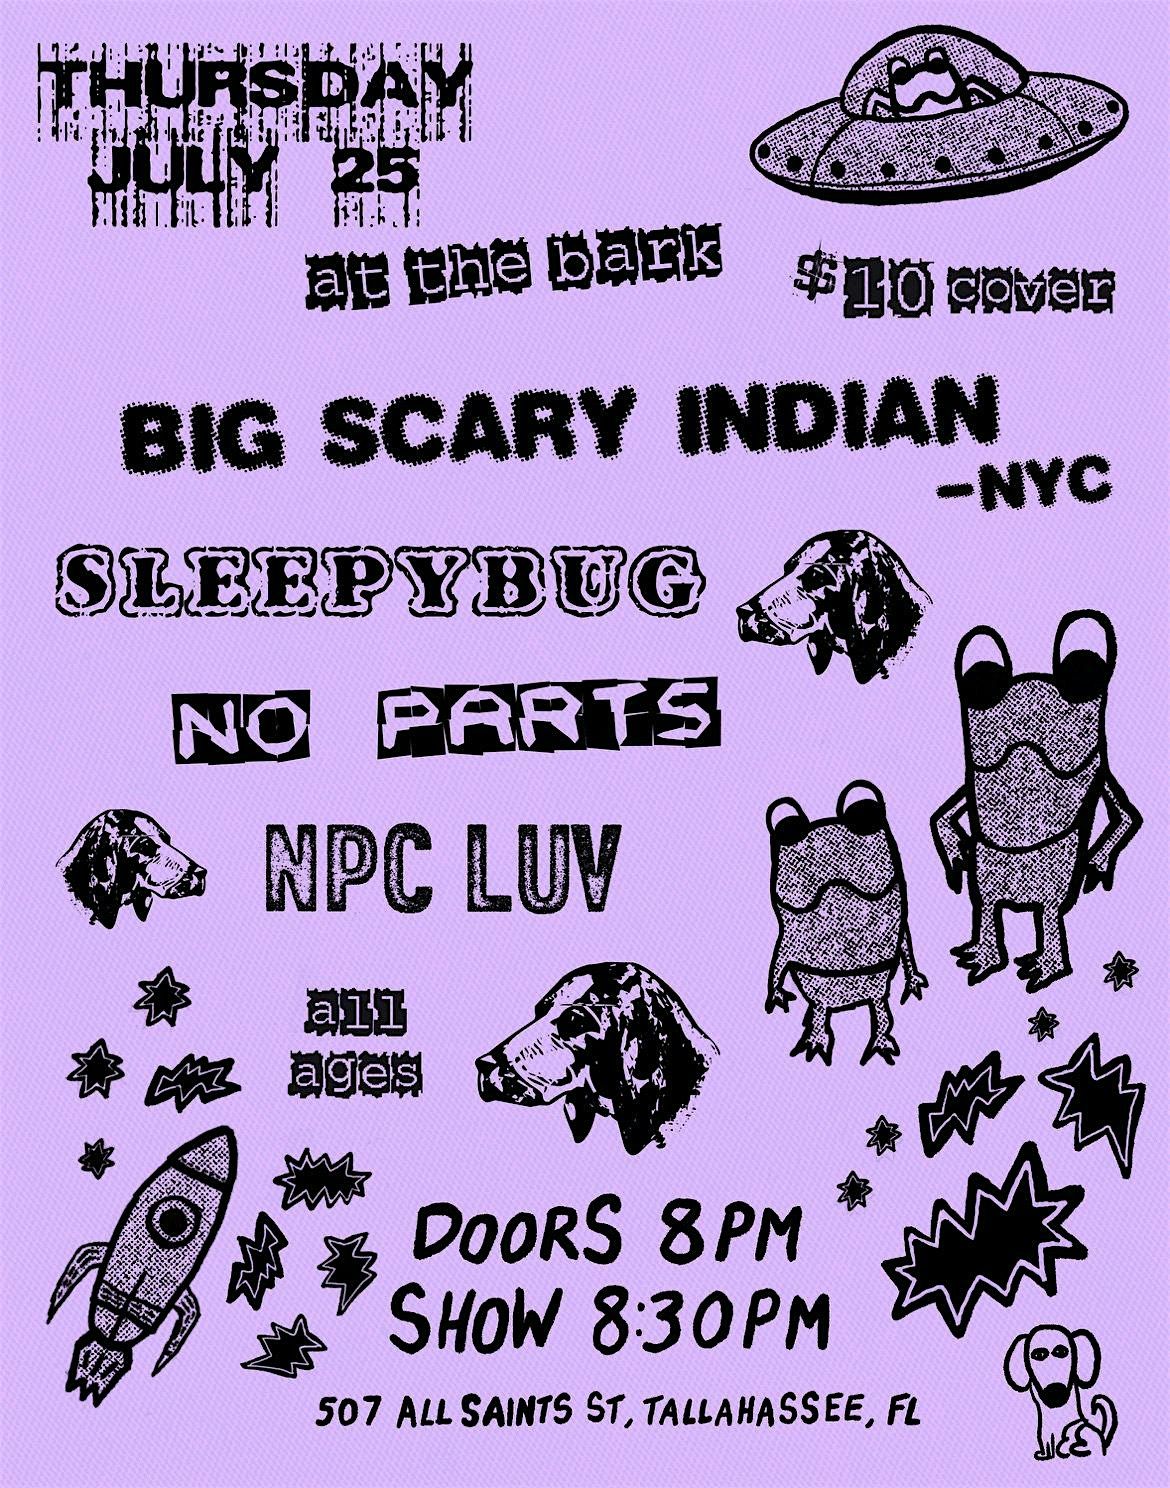 Big Scary Indian (NYC) w\/ No Parts, Sleepybug, npc luv at The Bark